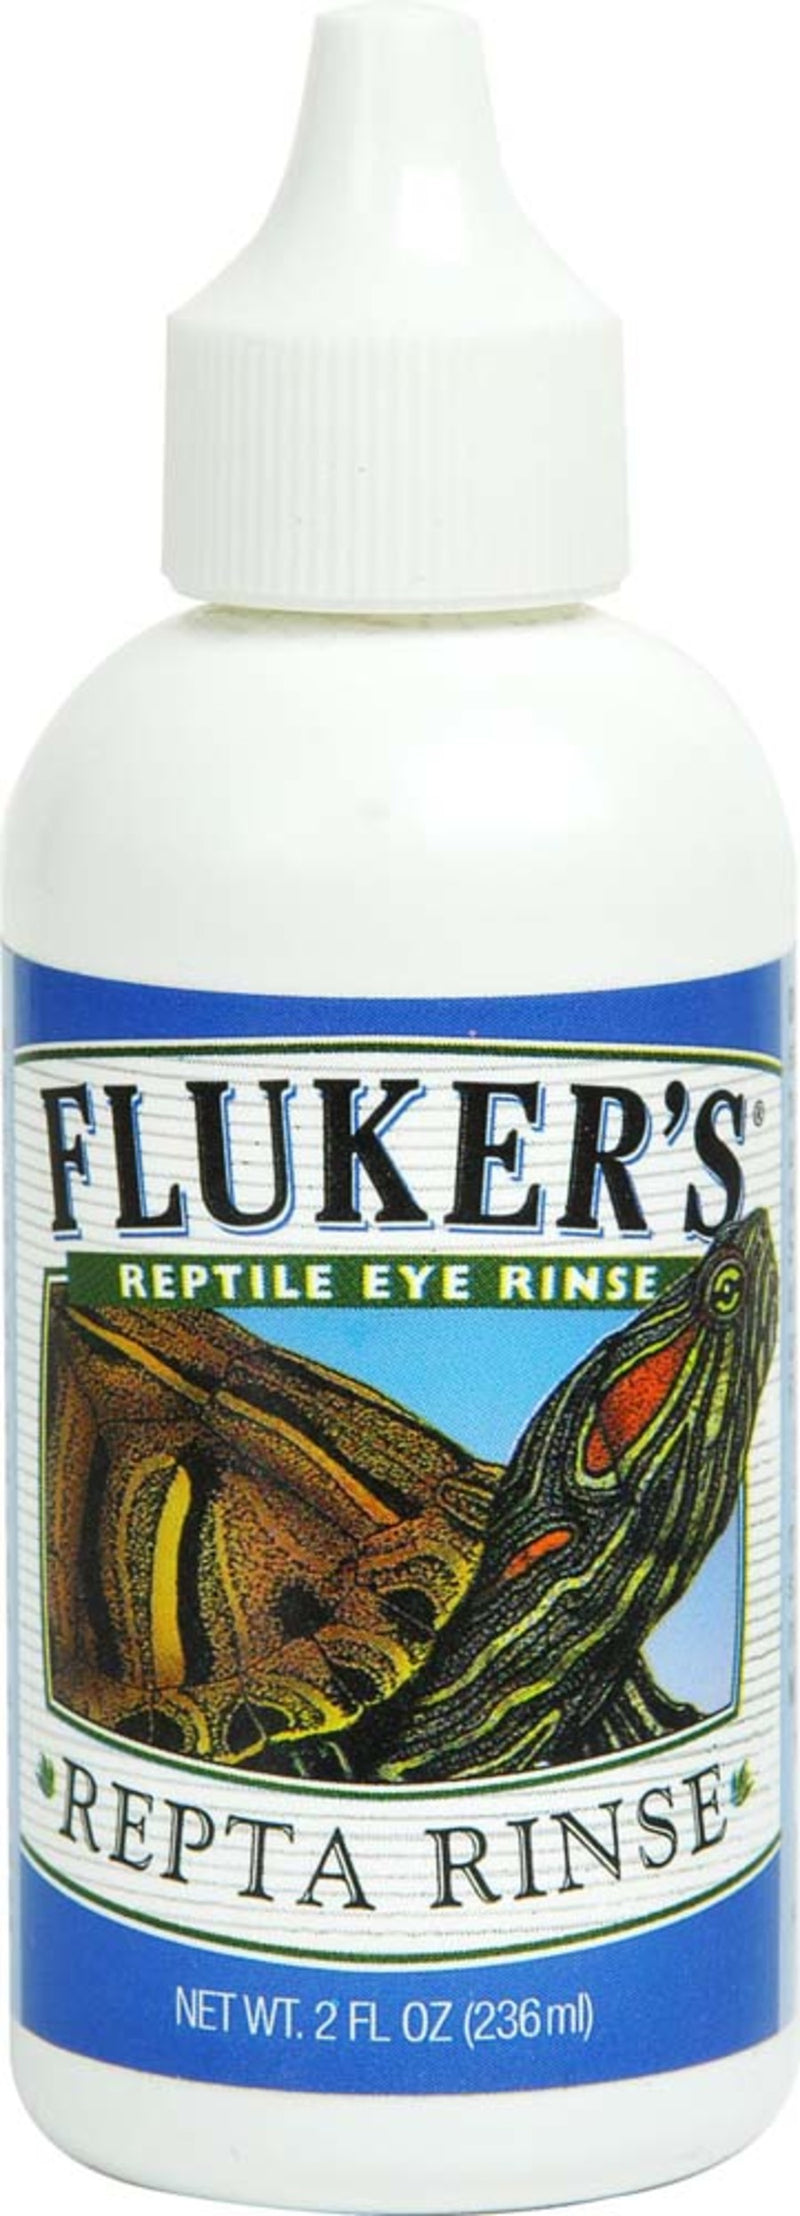 Repta-Rinse Reptile Eye Rinse, 2 oz